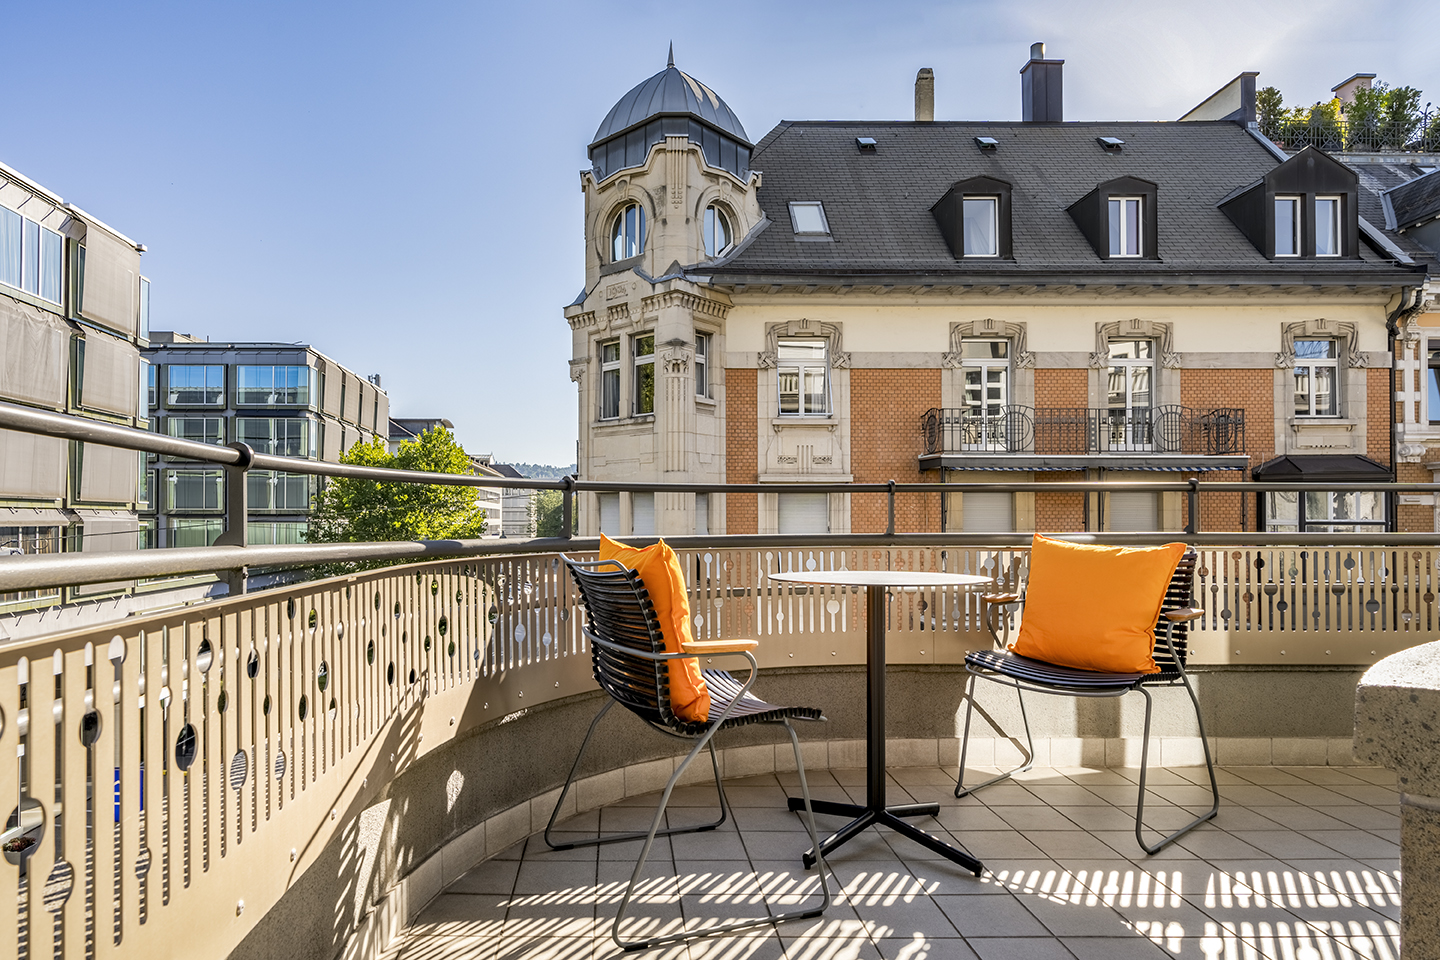 Zurich Hotel Suite with balcony